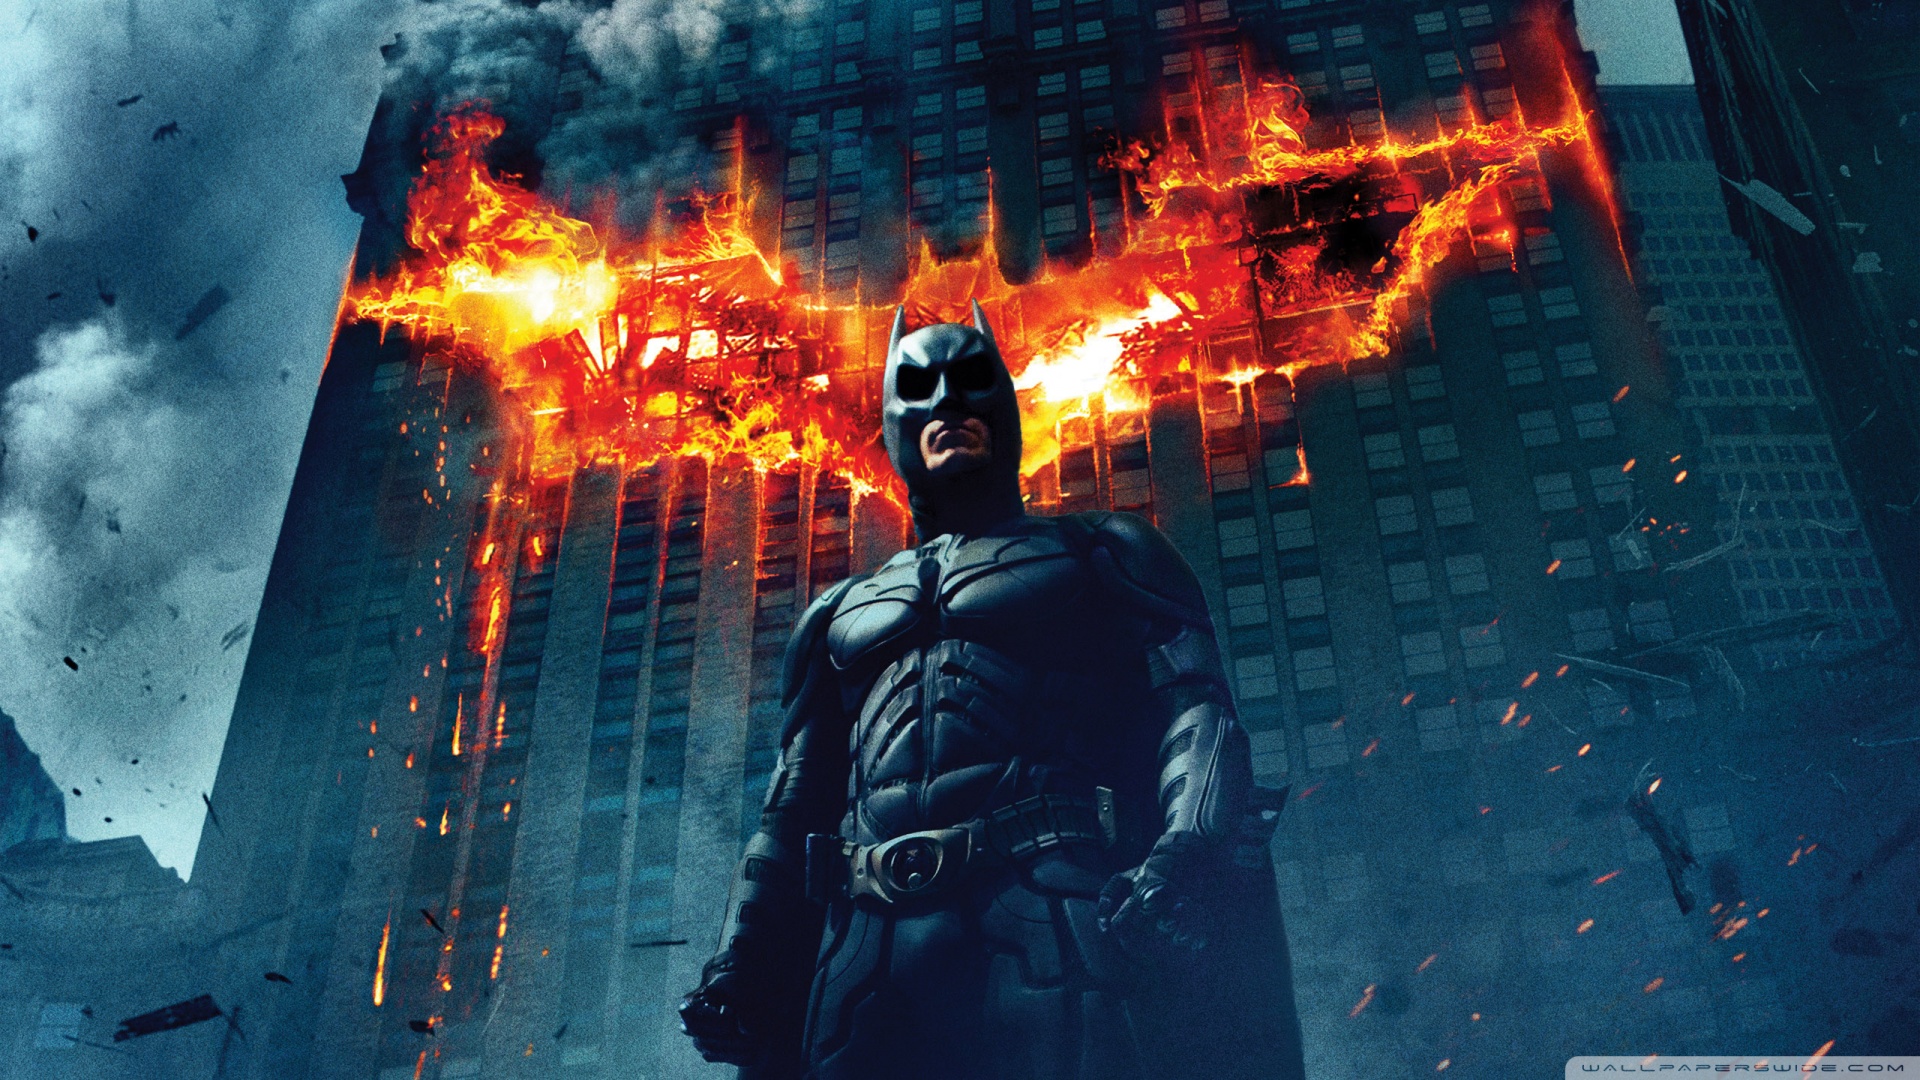 Batman: The Dark Knight High Quality Background on Wallpapers Vista